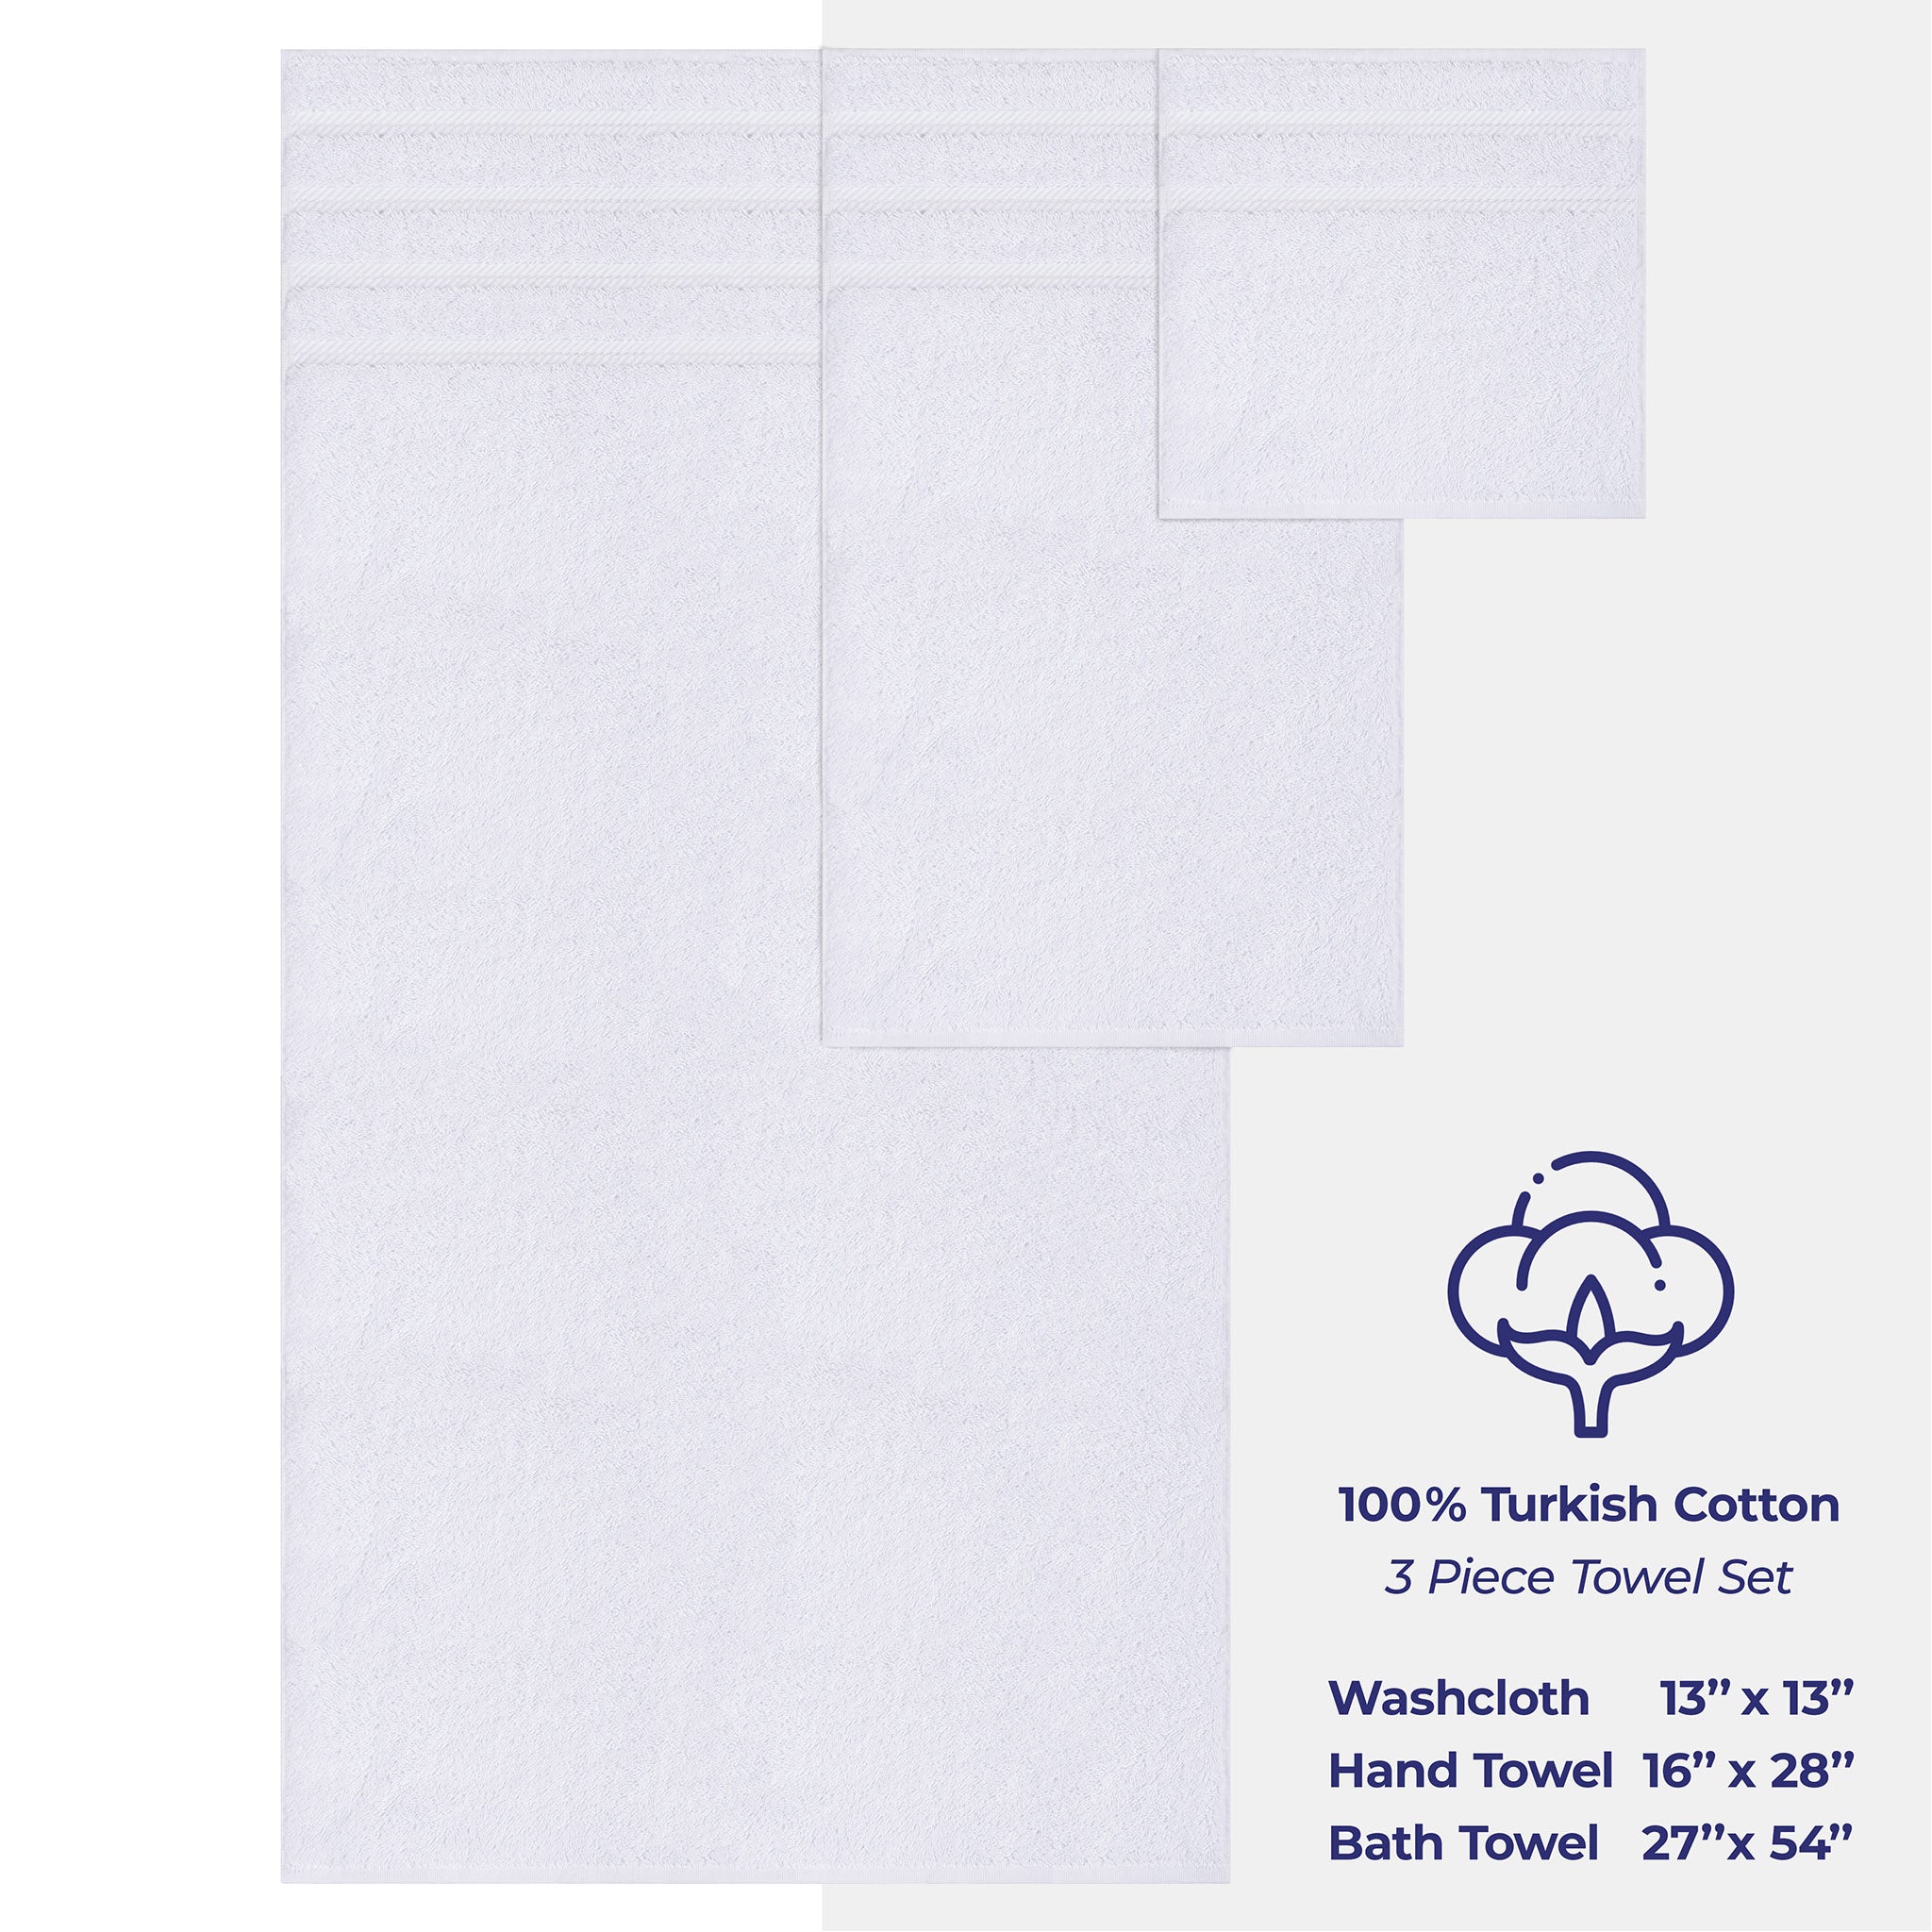 American Soft Linen 3 Piece Luxury Hotel Towel Set 20 set case pack white-4